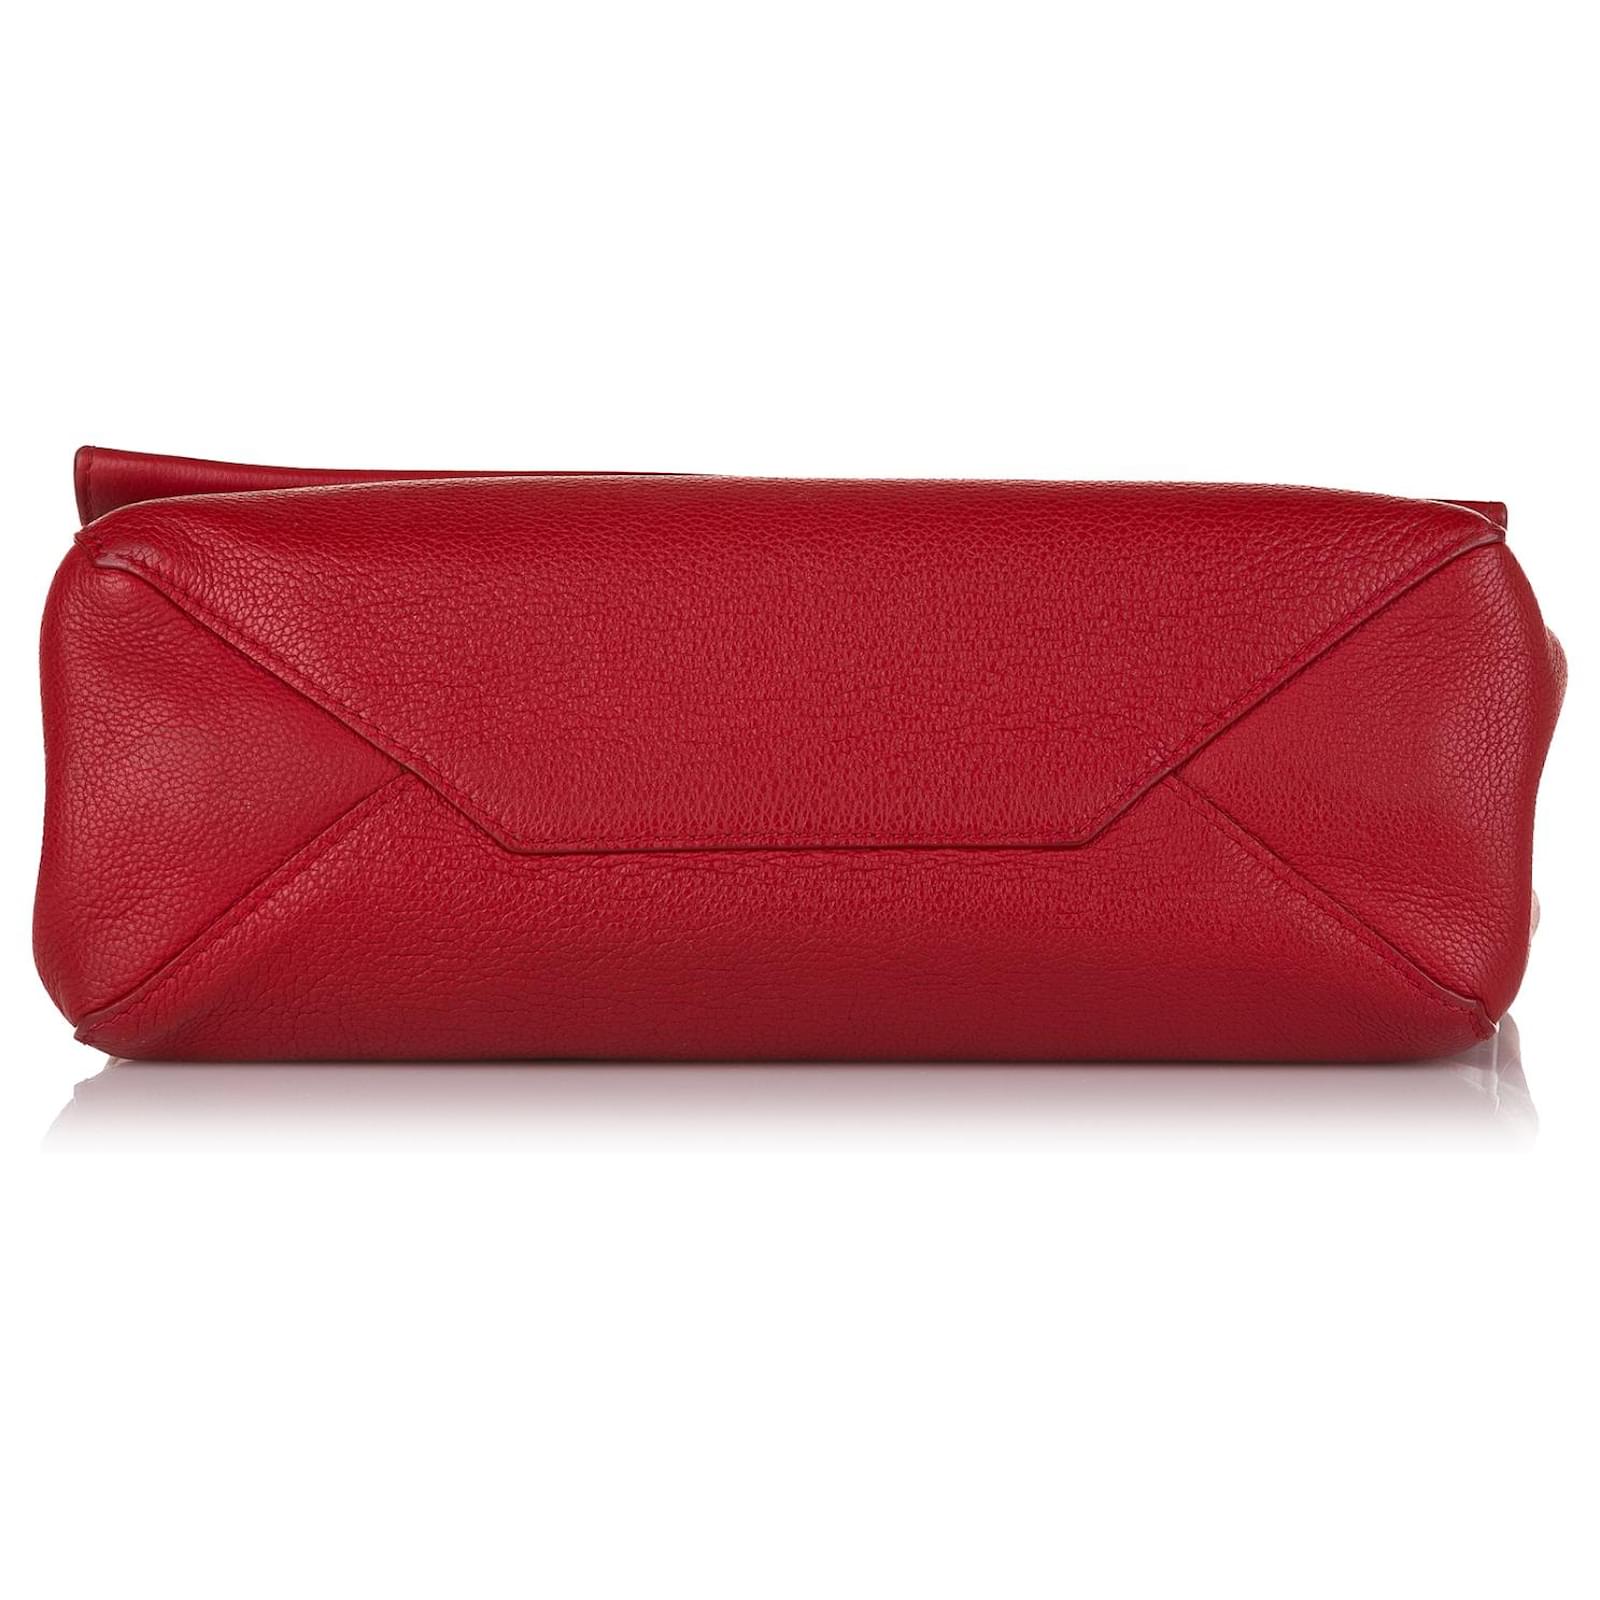 Louis Vuitton Red Leather Lockme II Wallet